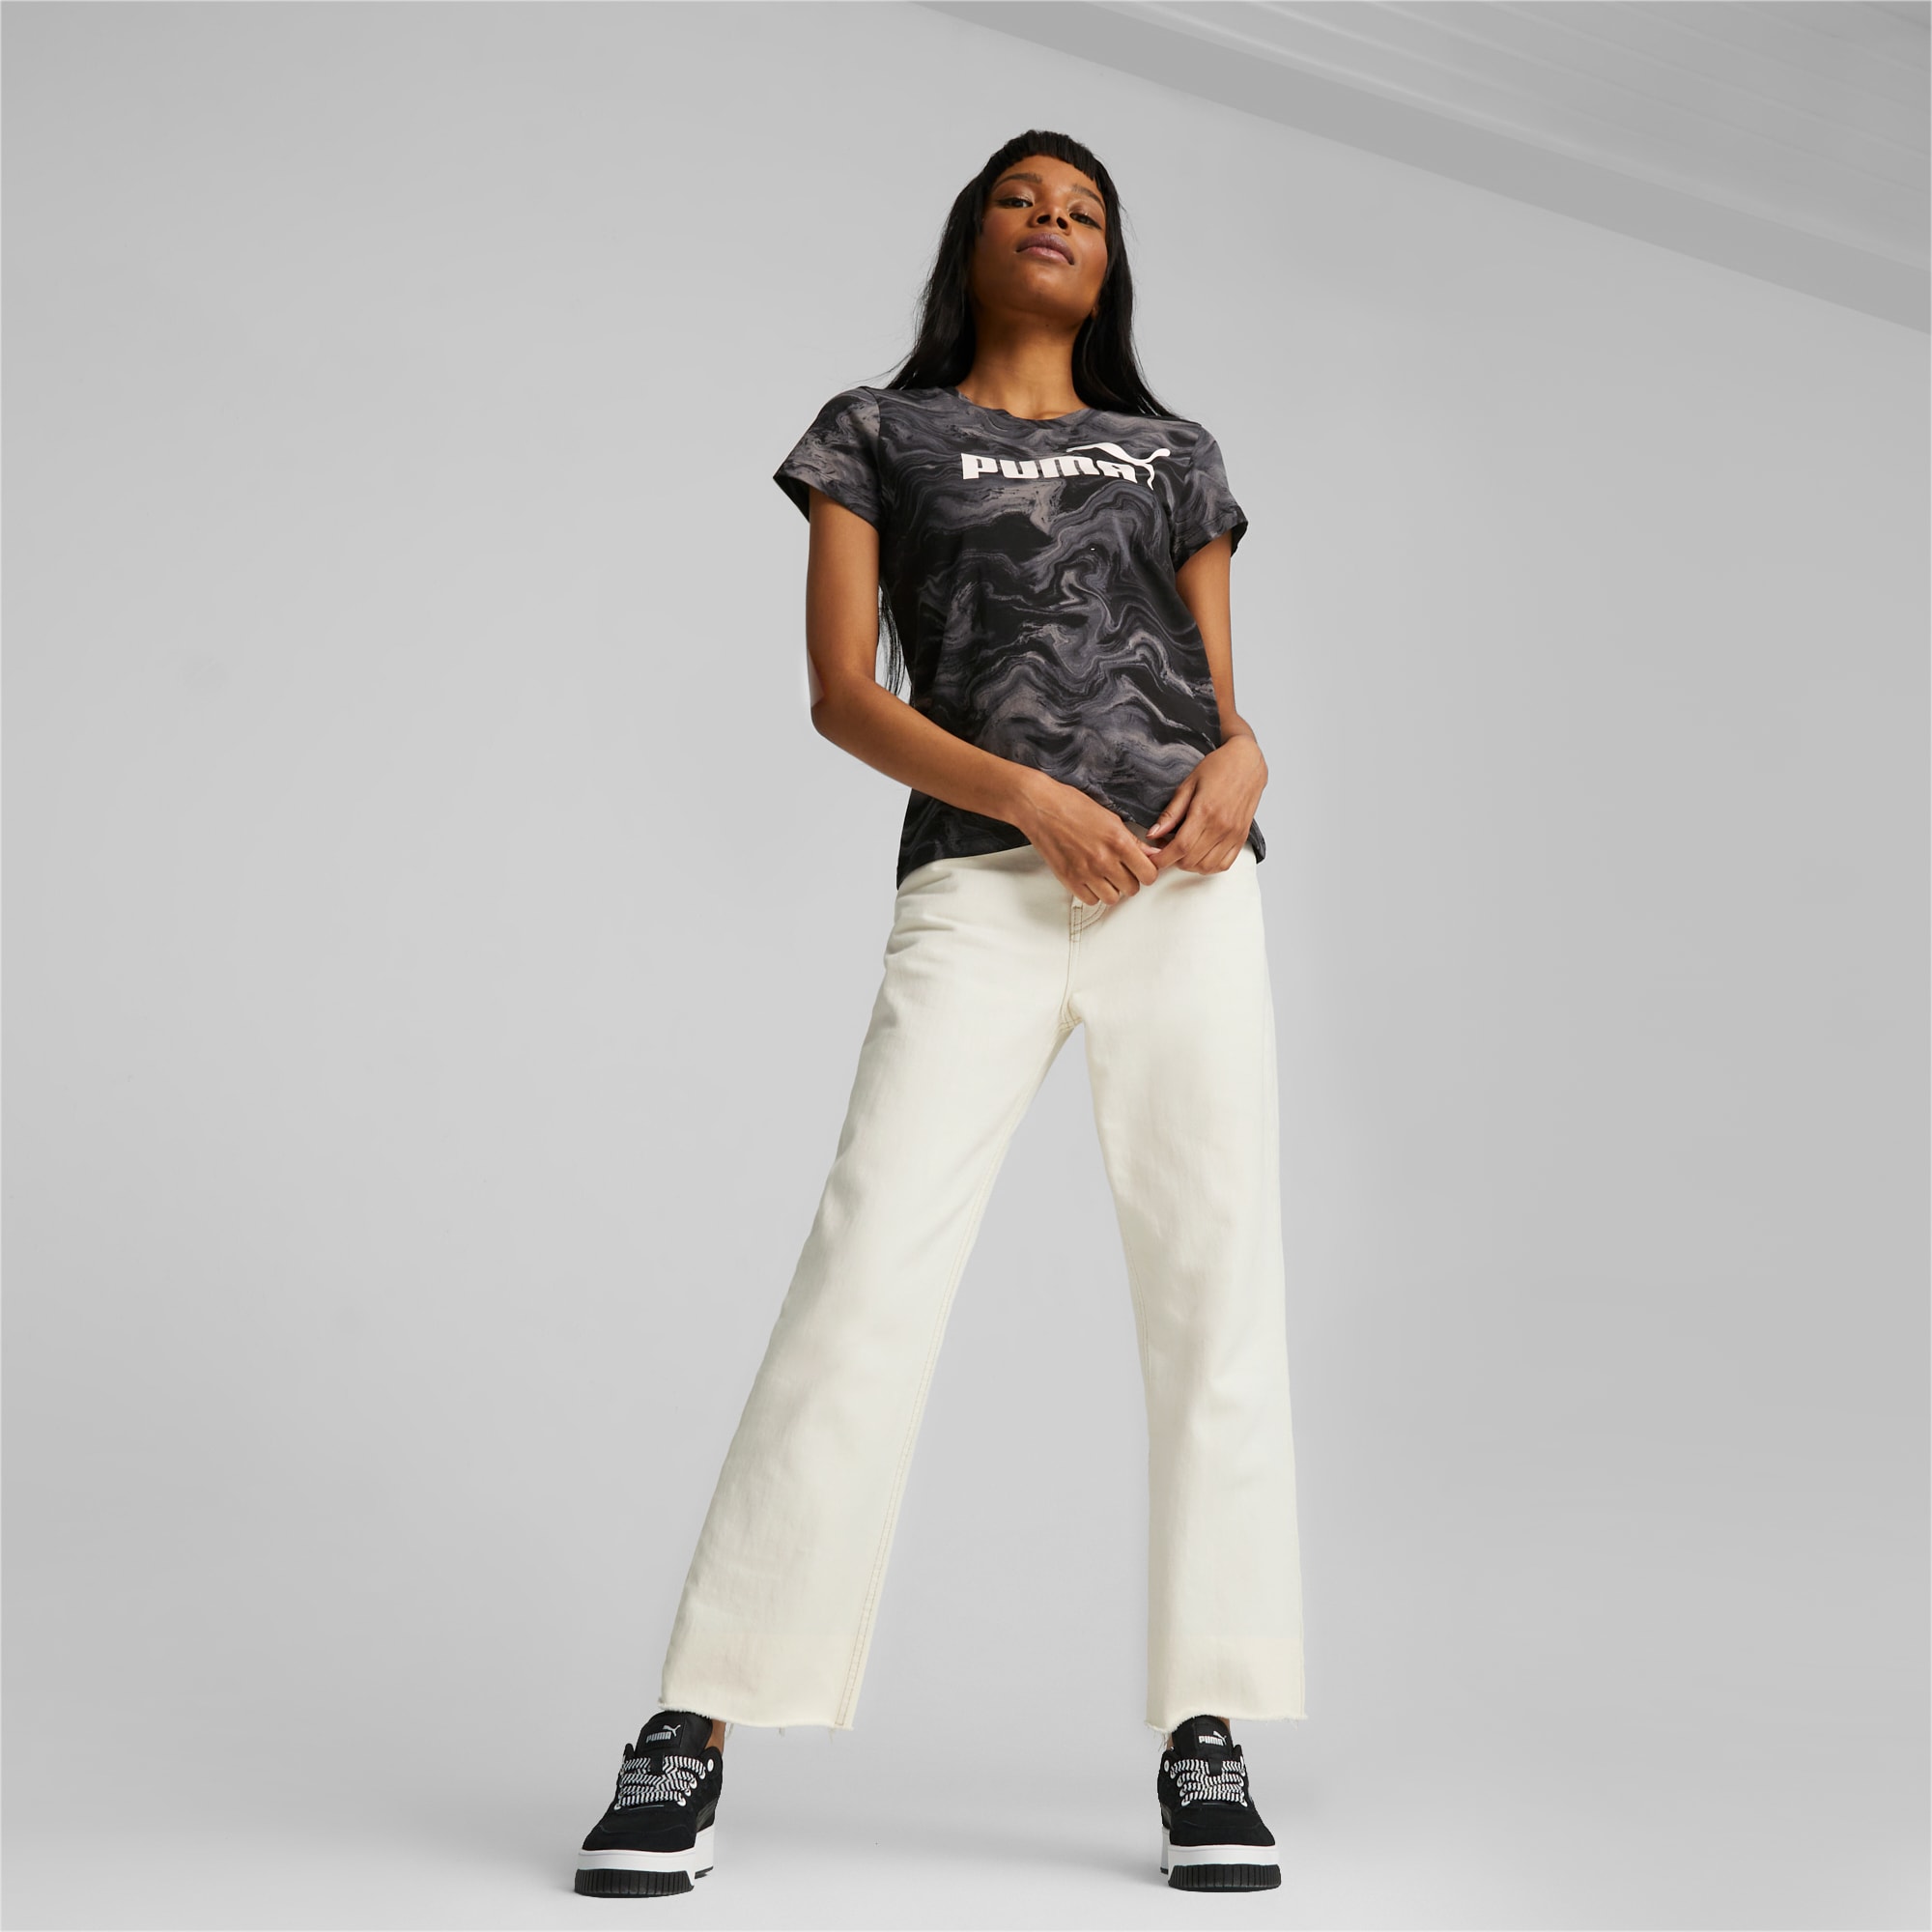 PUMA Ess+ Marbleized Women's T-Shirt, Black, Size M, Clothing